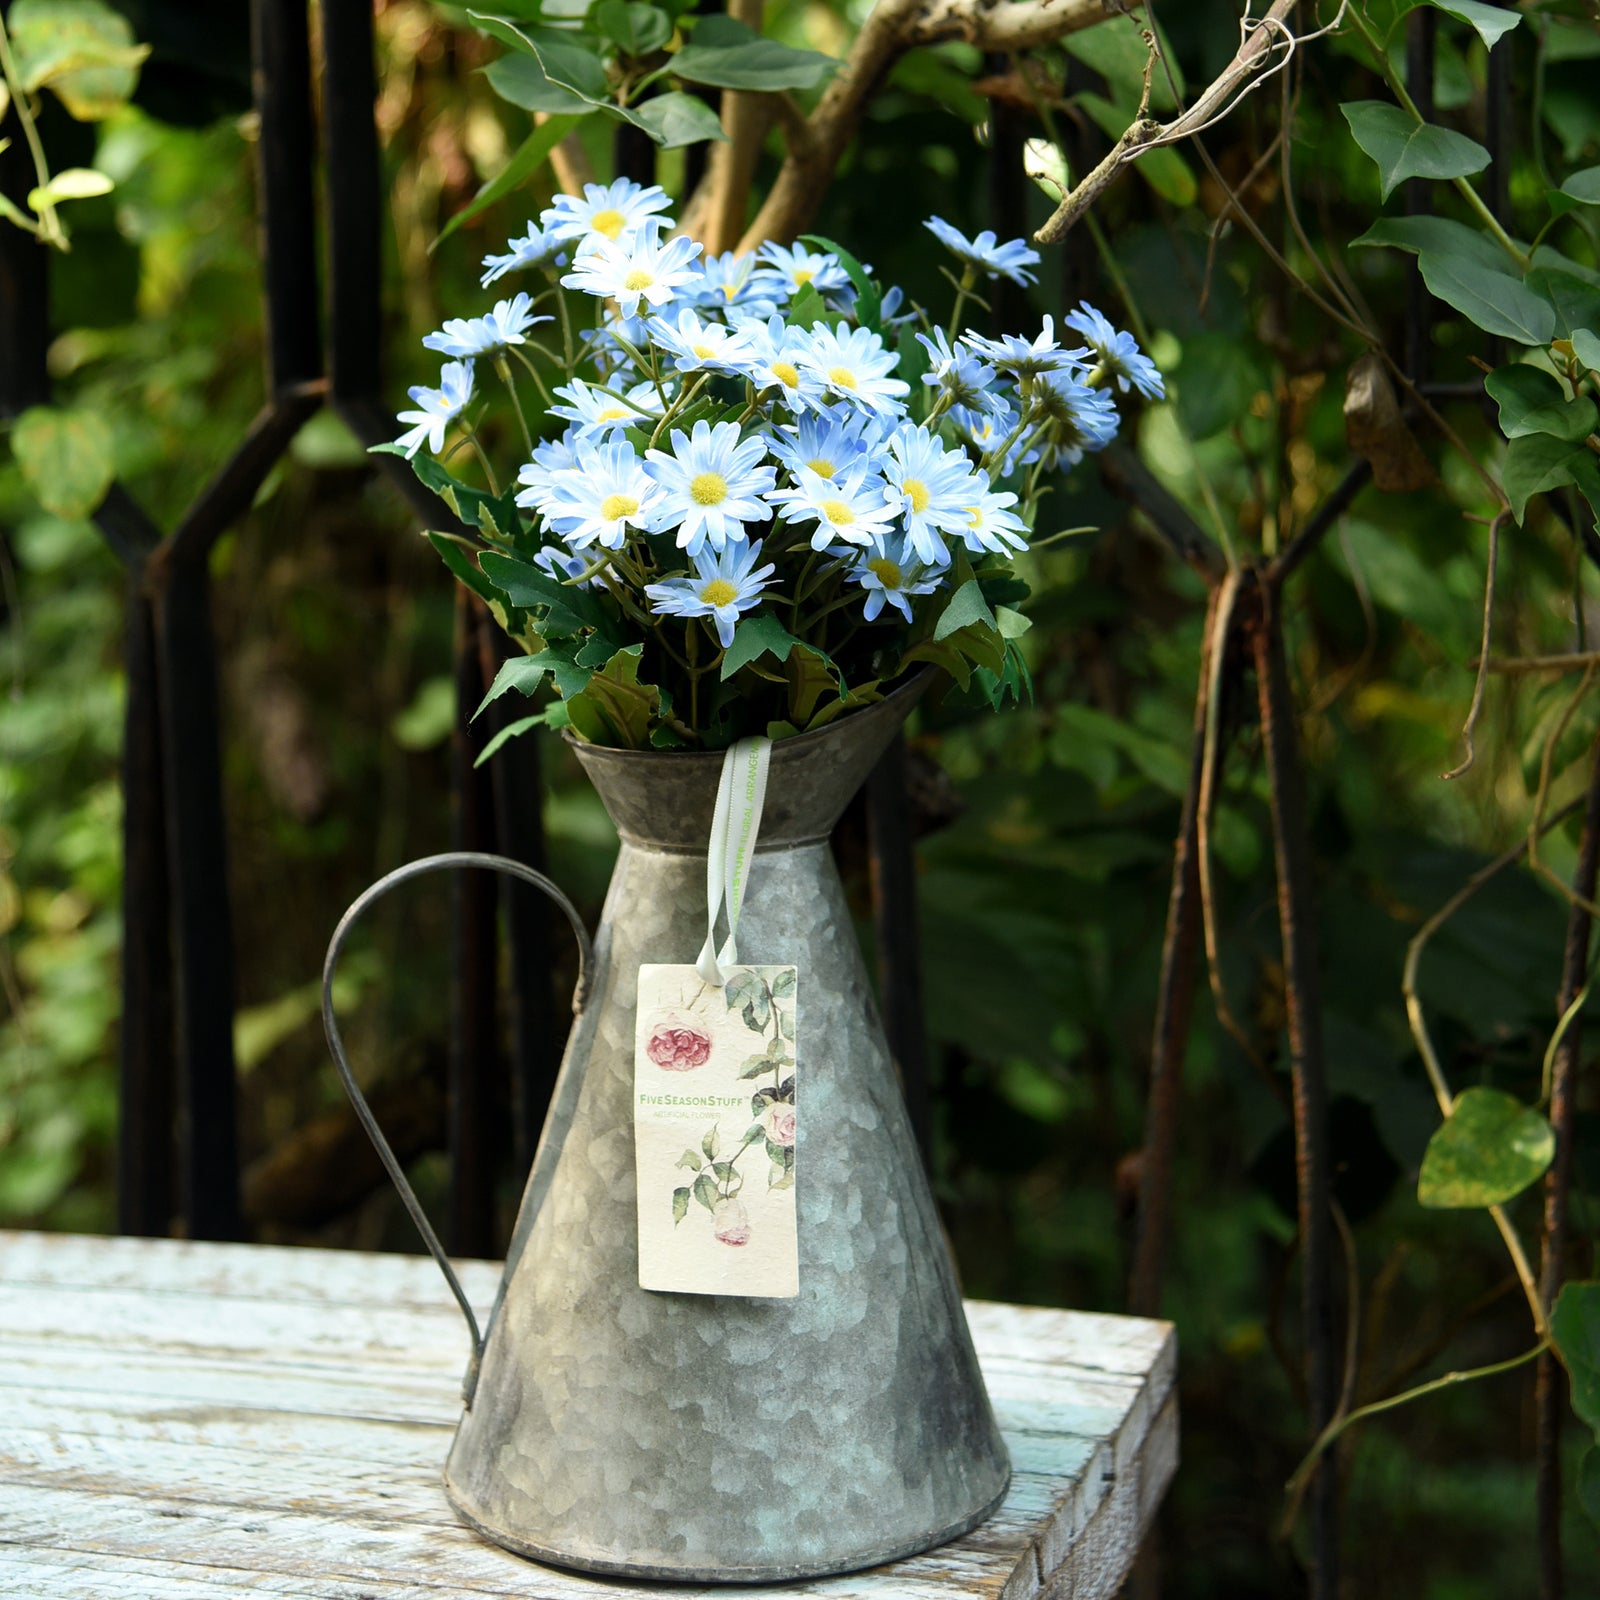 Daisy Silk Flowers Outdoor Artificial Flowers Arrangements (Lake Blue) 2 Bunches